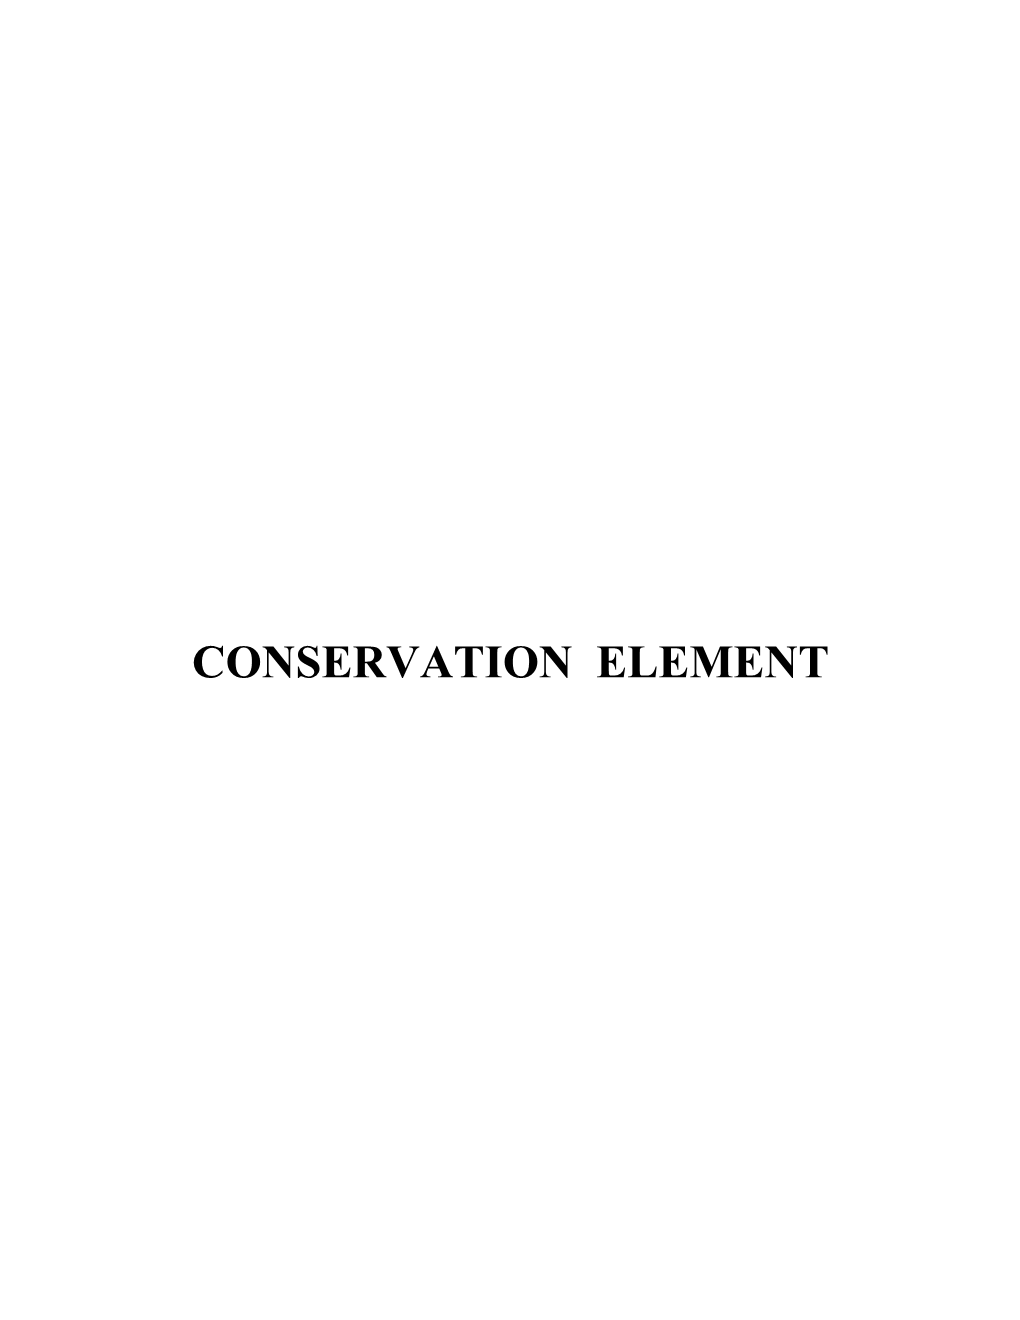 2008 Comprehensive Plan: Conservation Element